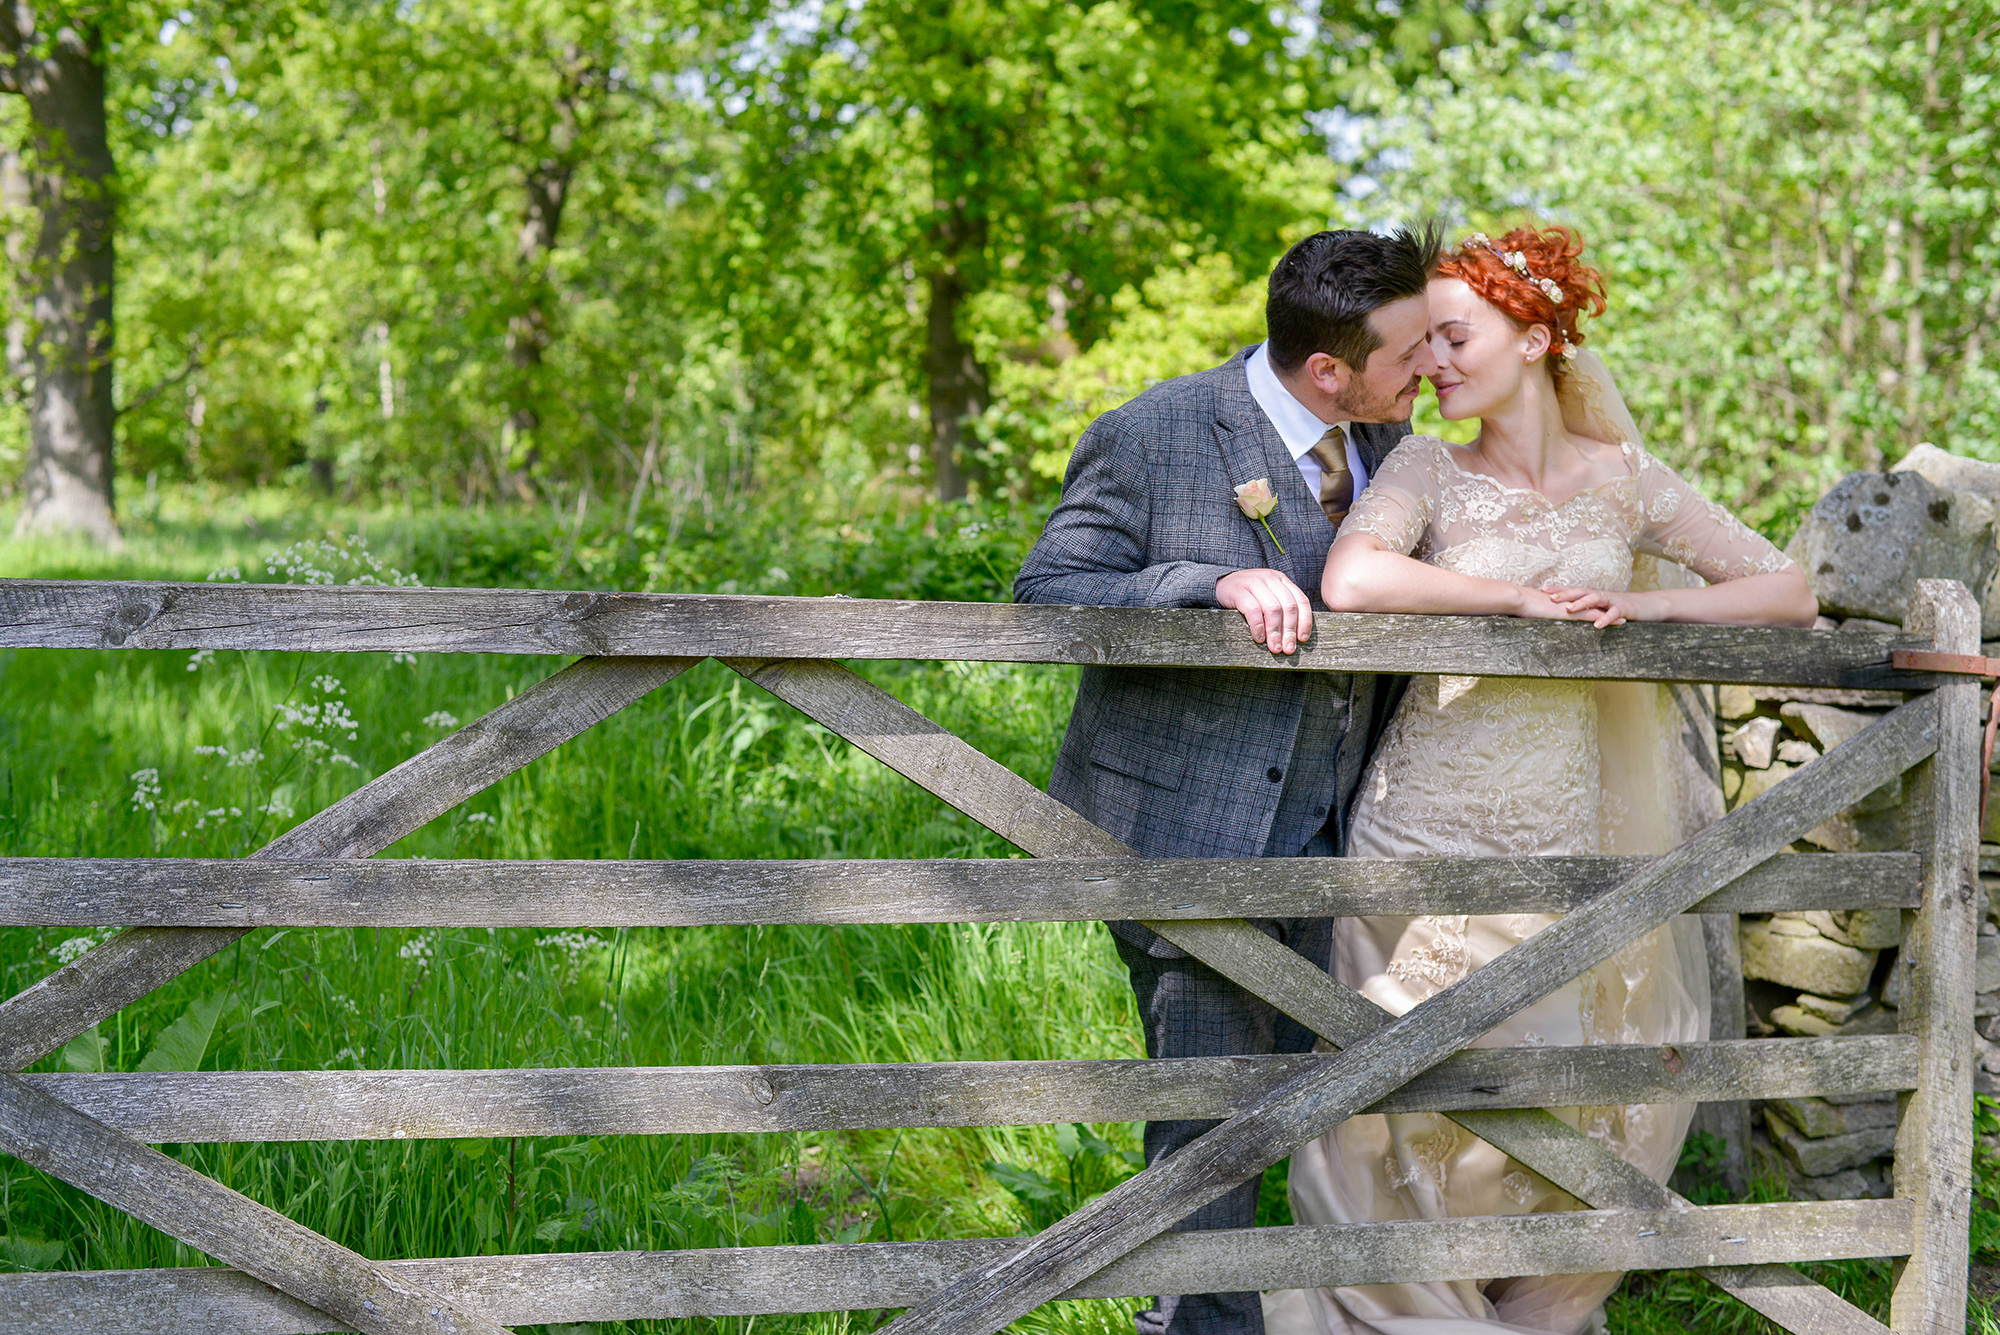 Heather_Darrell_Homemade-Rustic-Wedding_Kimberley-Waterson-Fine-Art-Photography_019